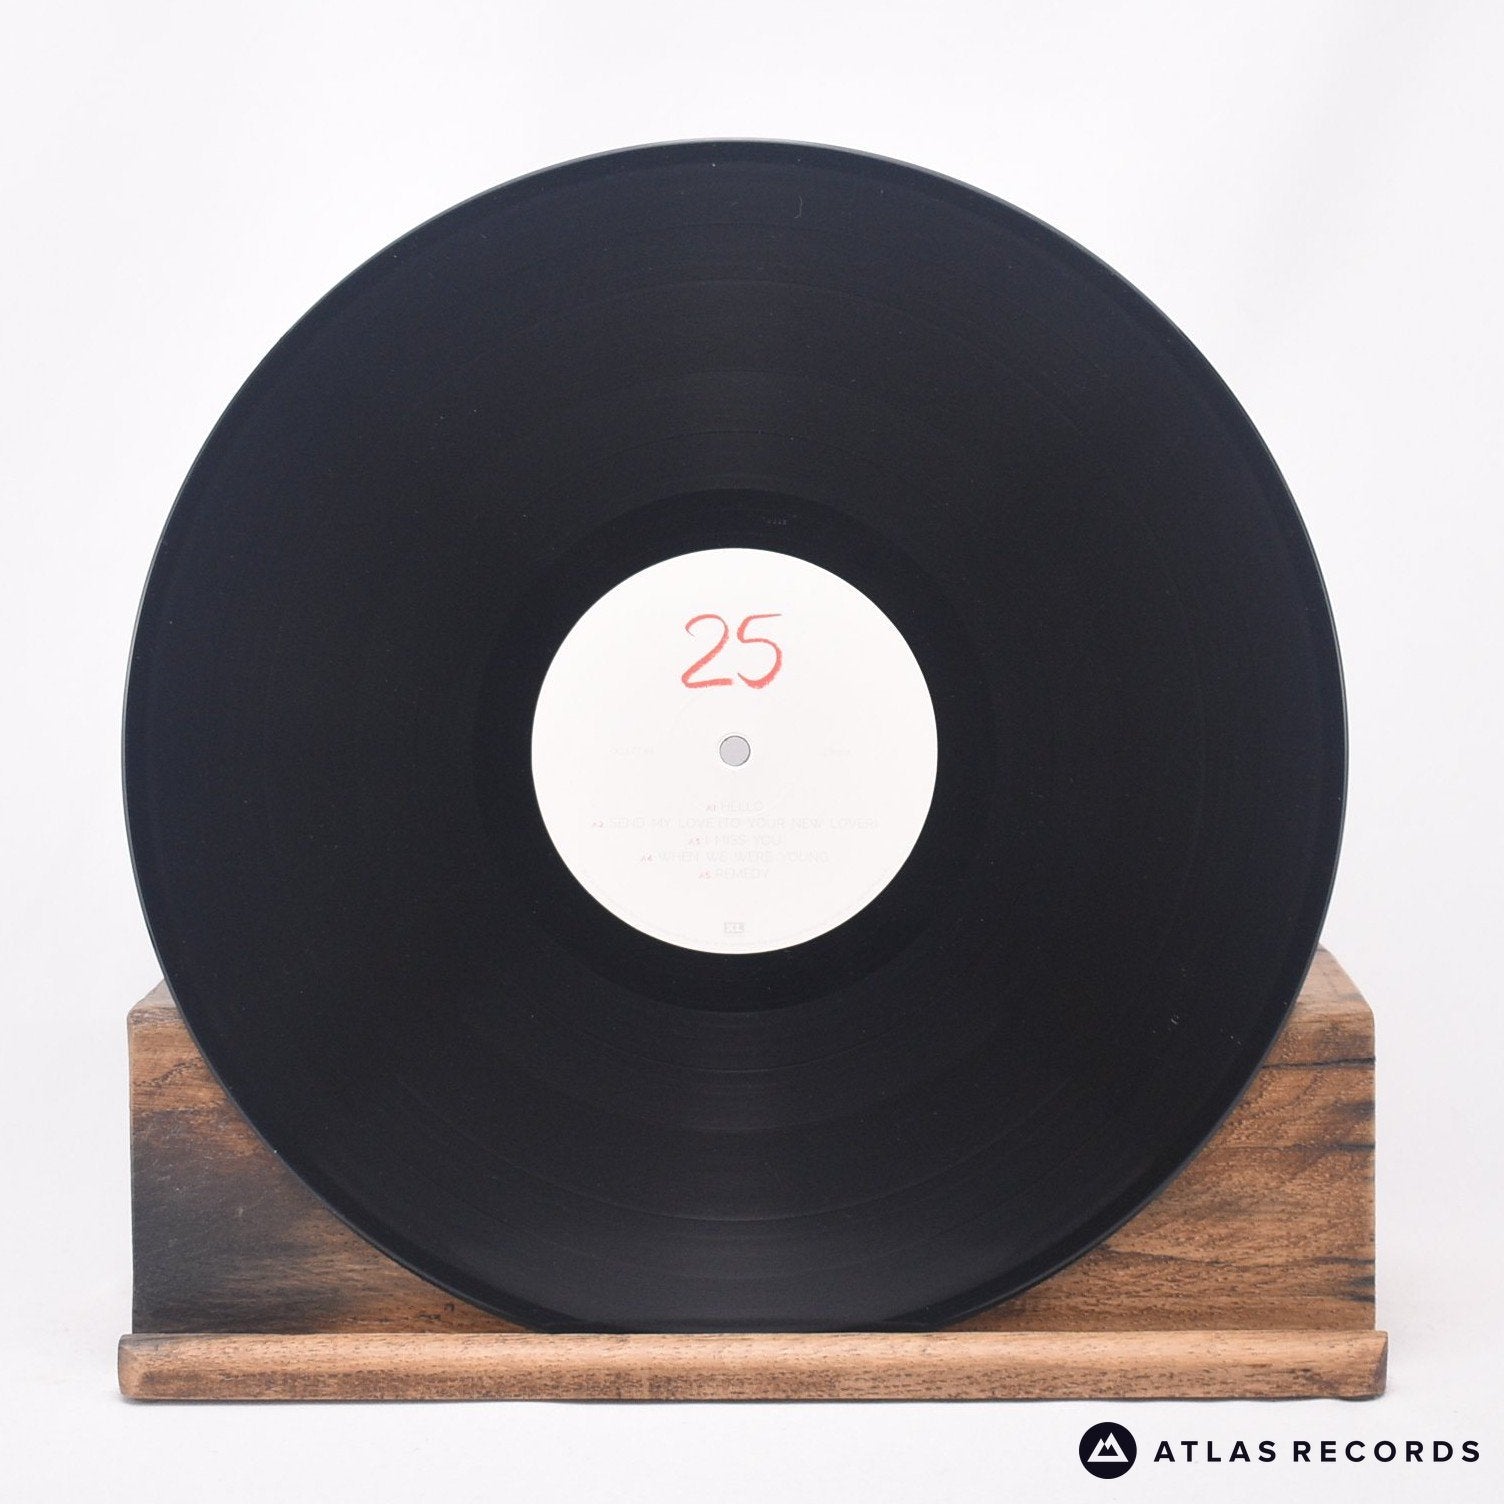 Adele - 25 LP - 180 Gram Black Vinyl Album - SEALED NEW Record - Hello